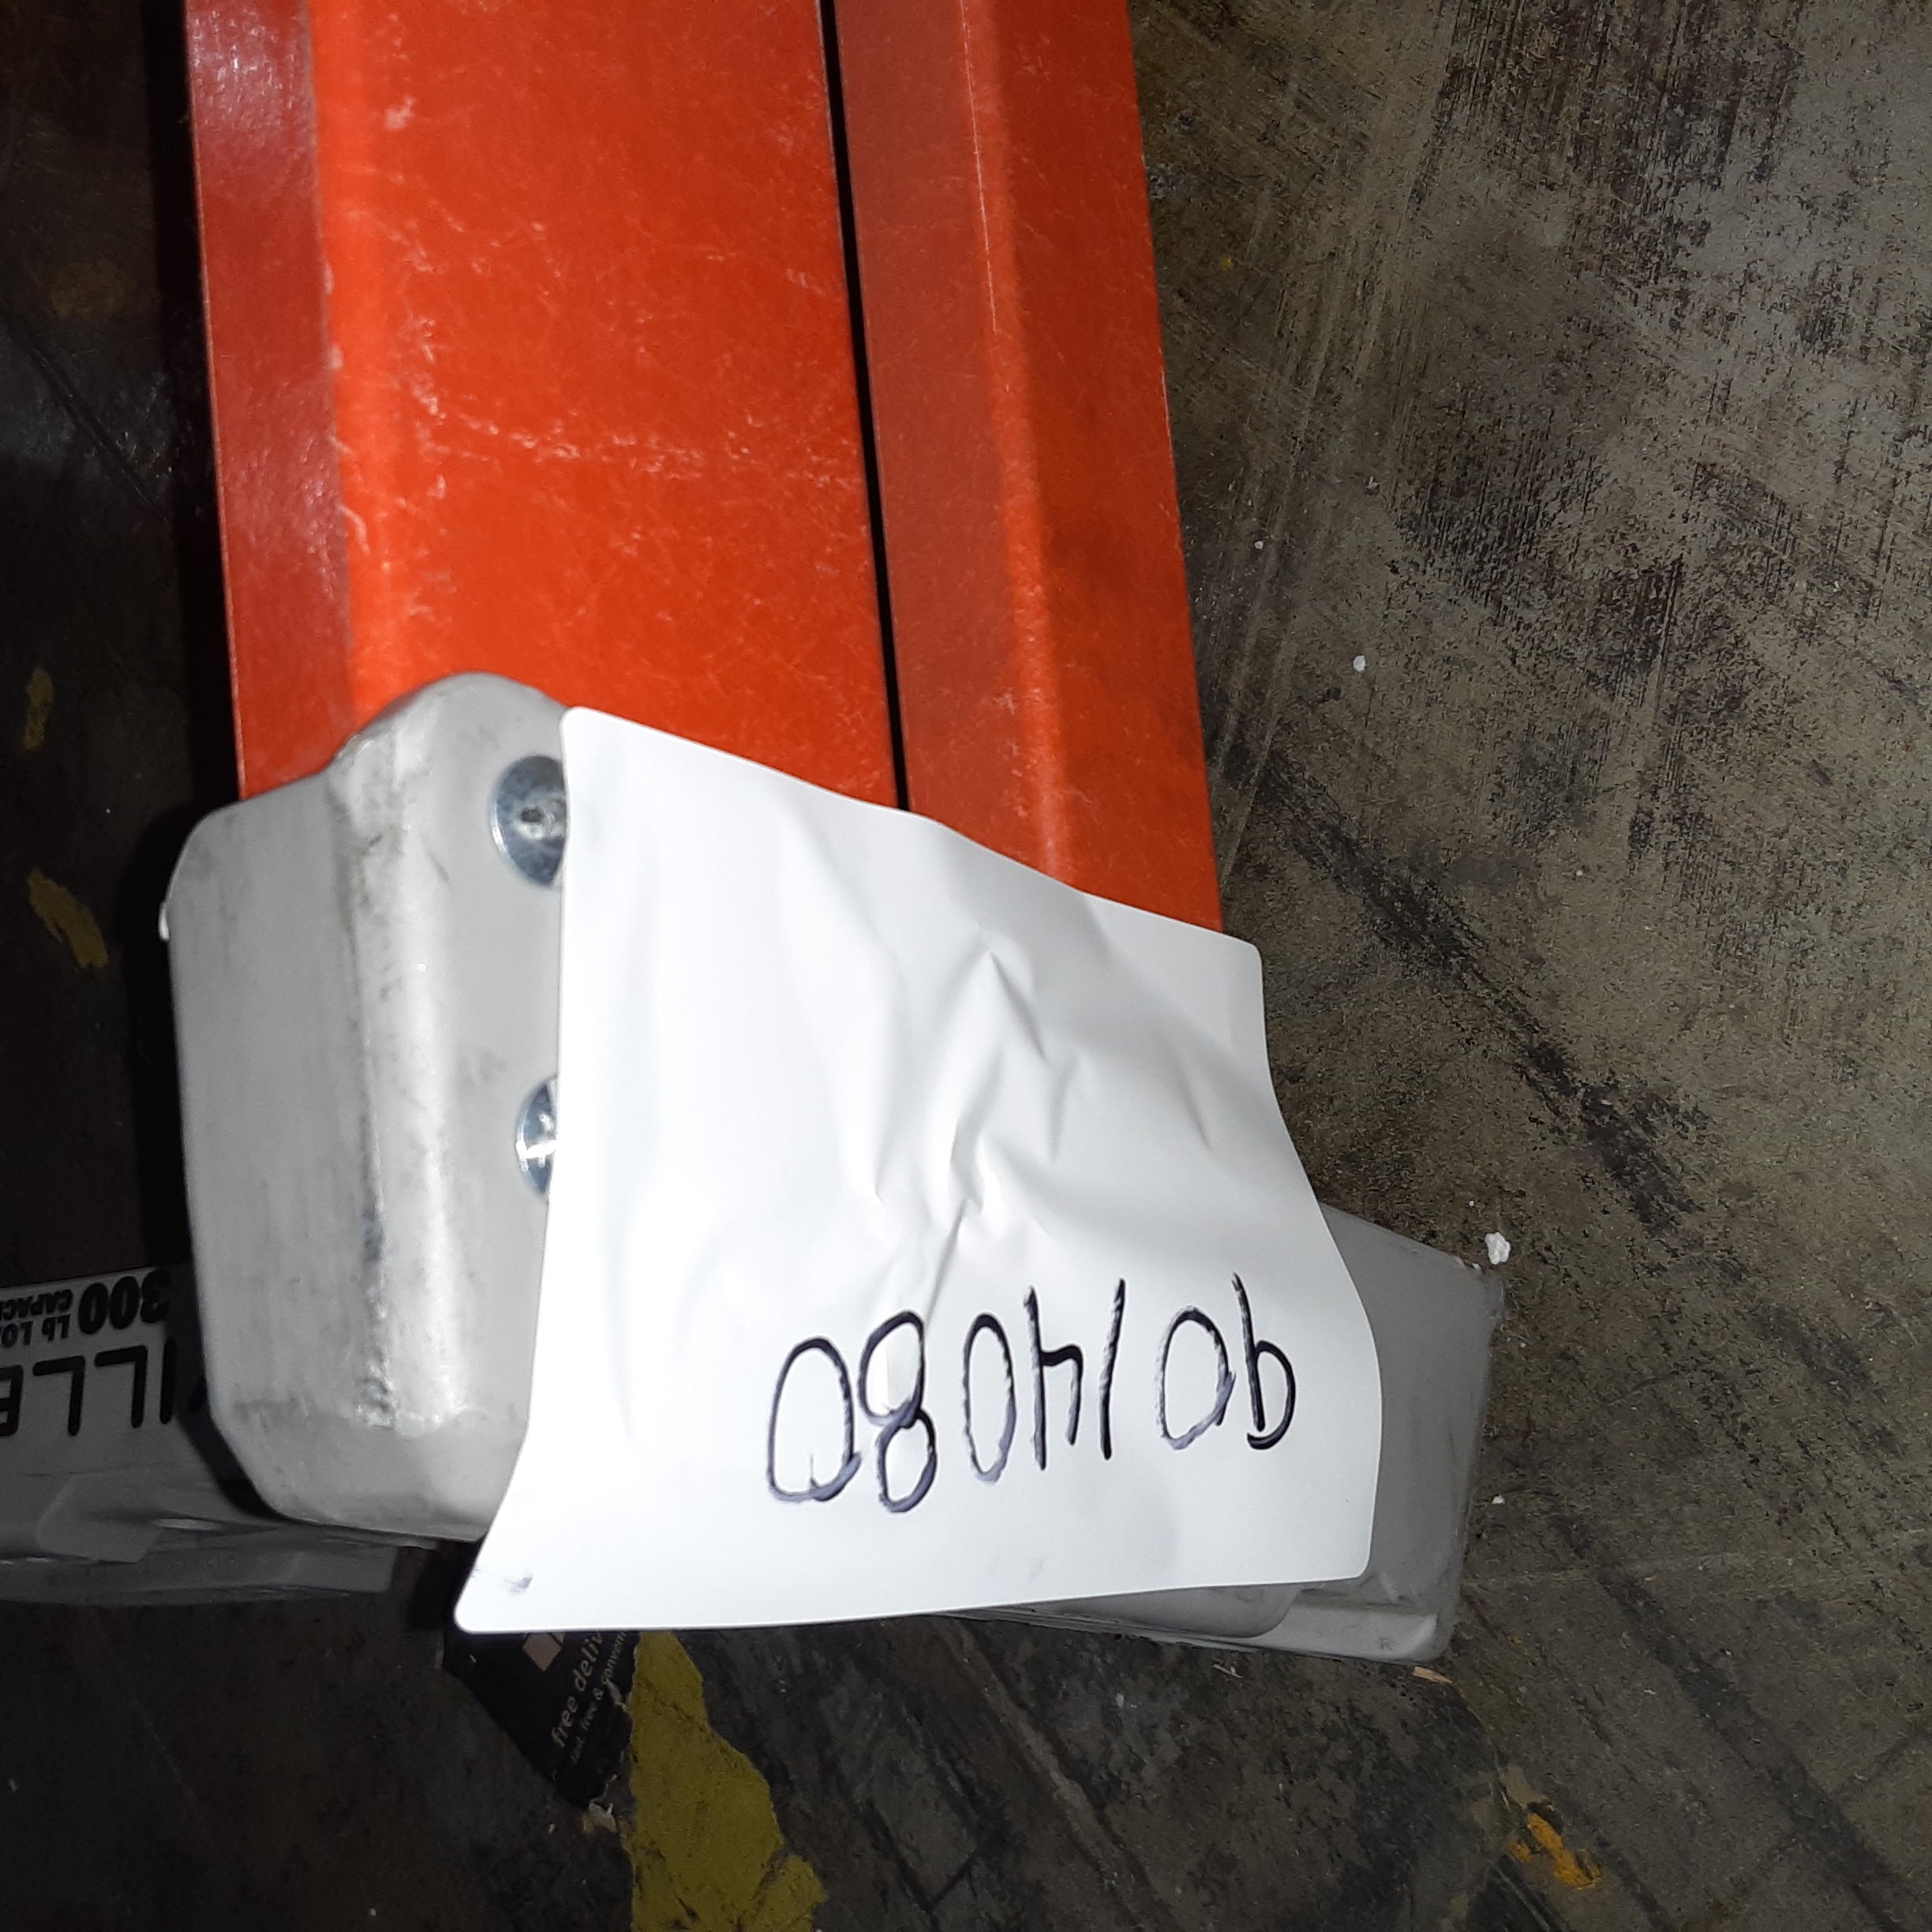 Louisville 8' Platform Step Ladder iA 300lbs Fiberglass FXP1708